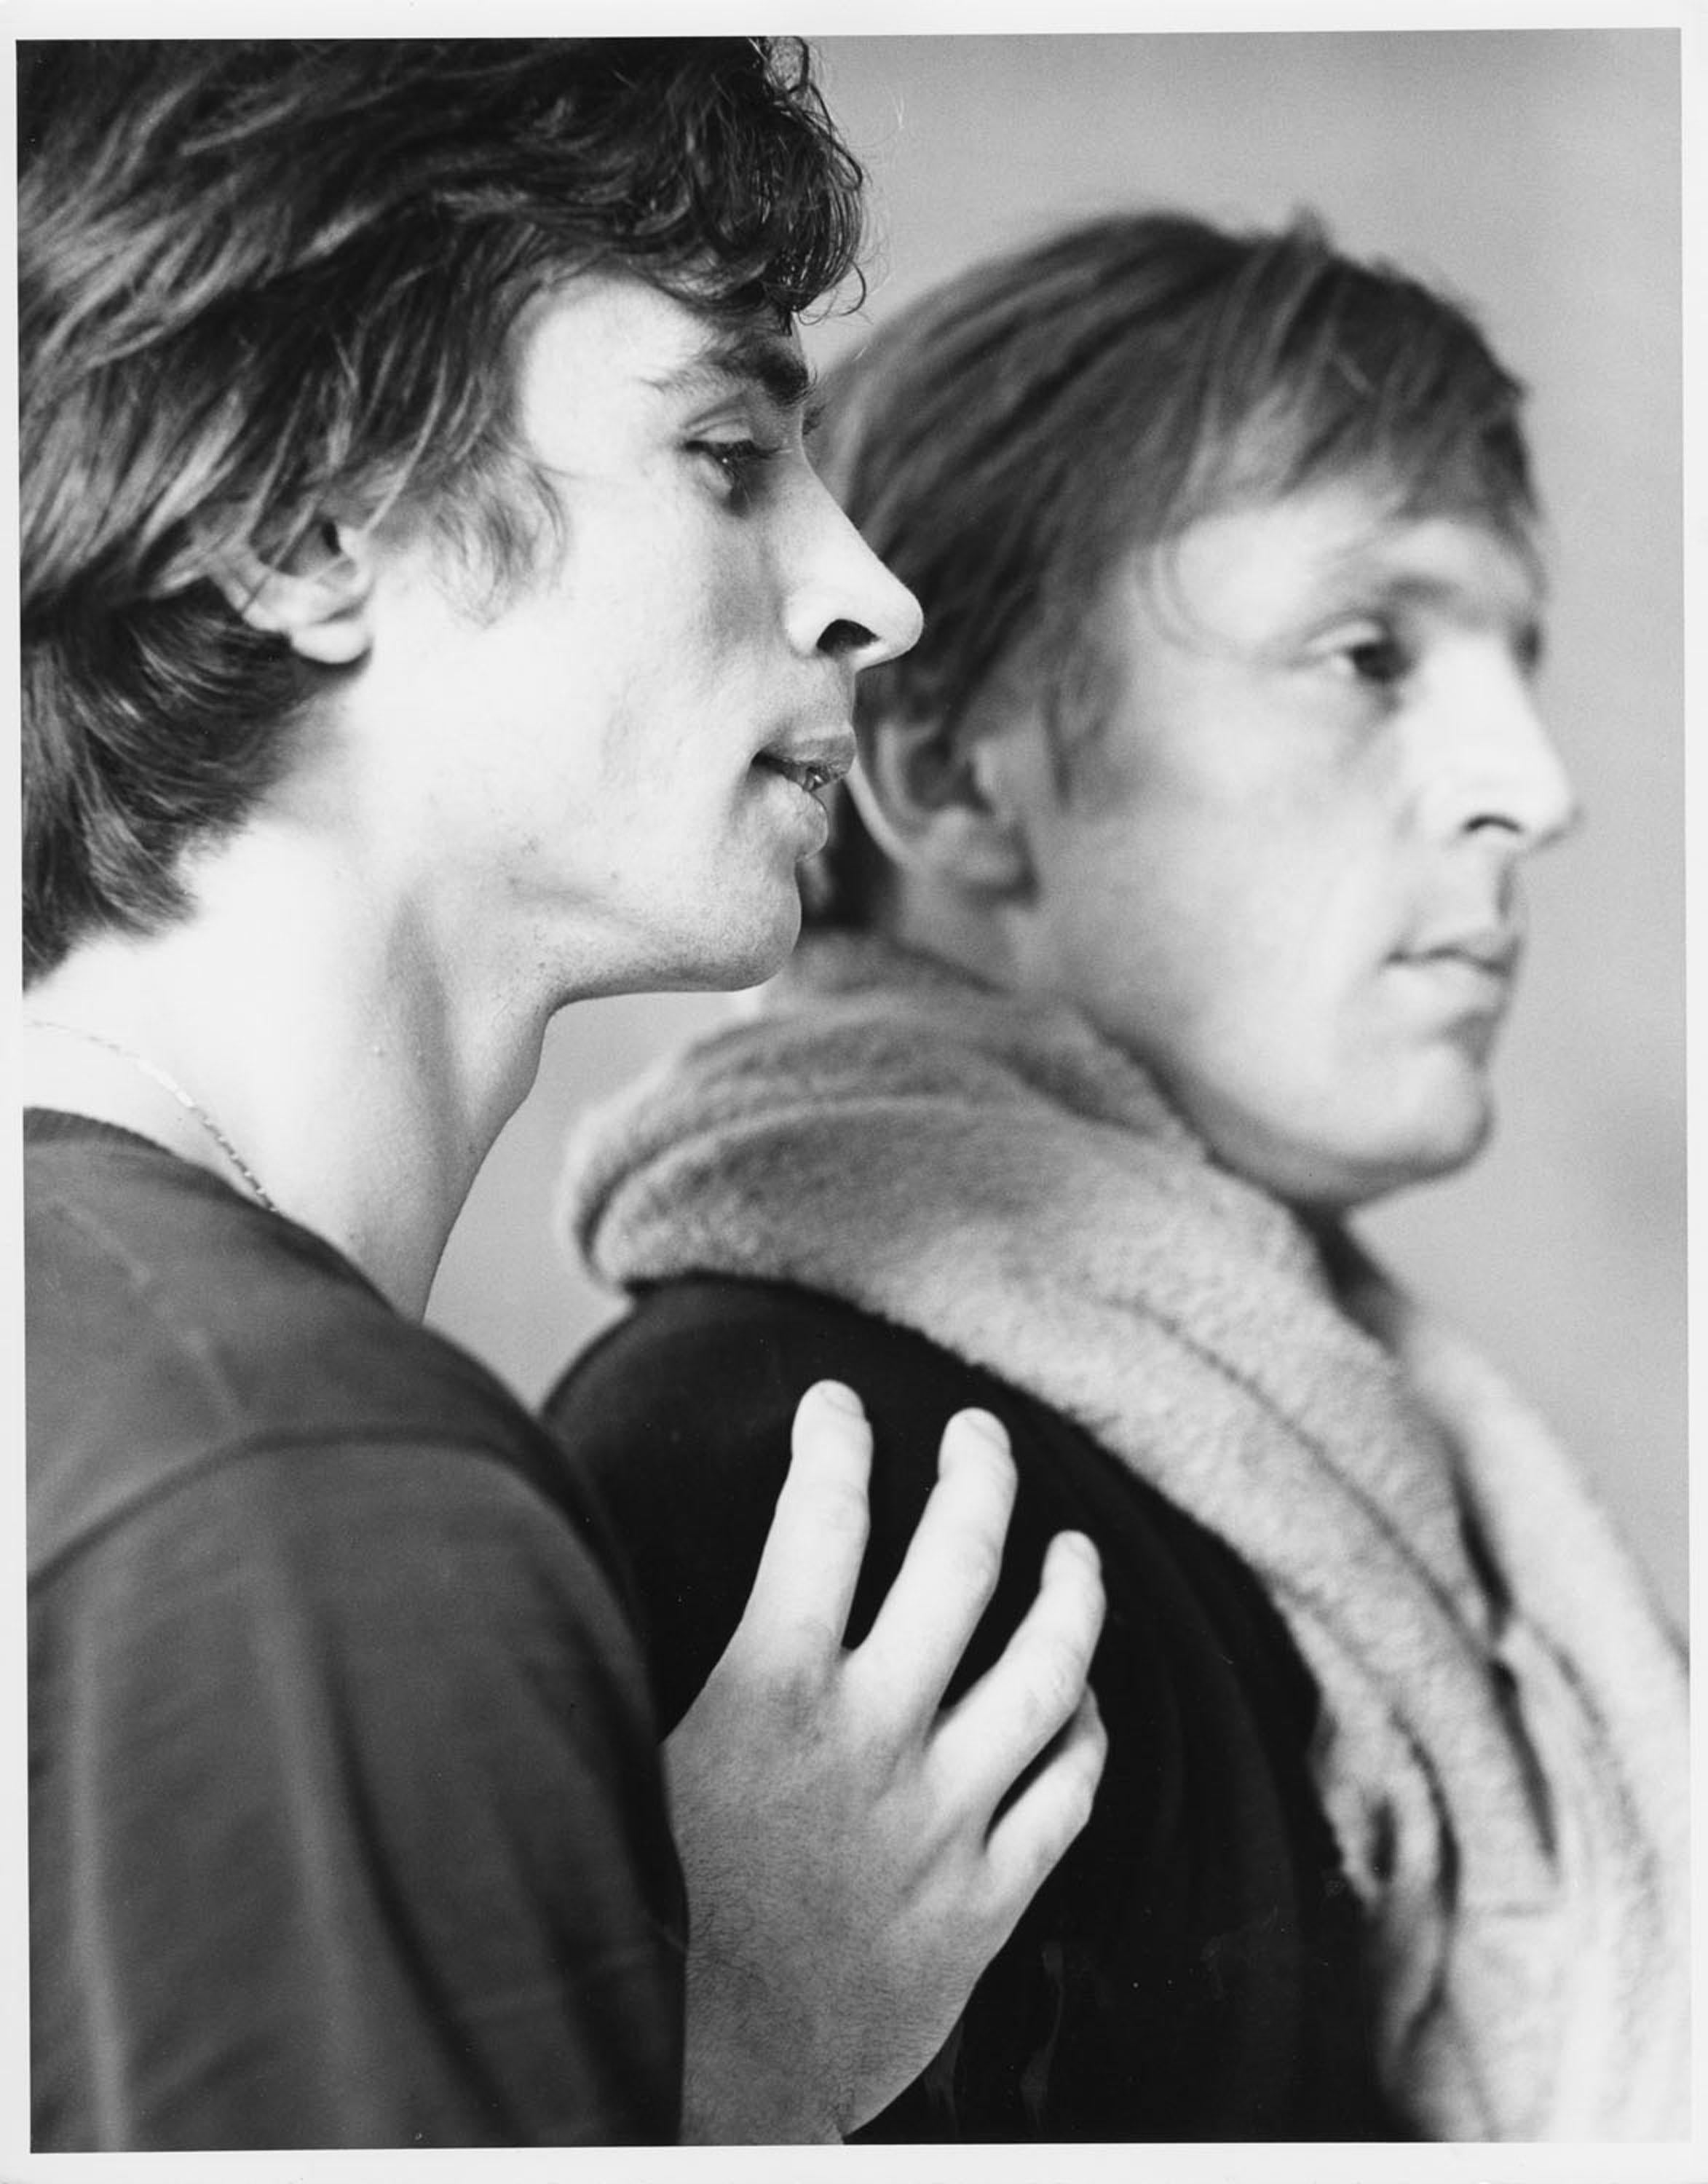 Jack Mitchell Black and White Photograph - Rudolf Nureyev and Erik Bruhn photographed rehearsing, January 20, 1962